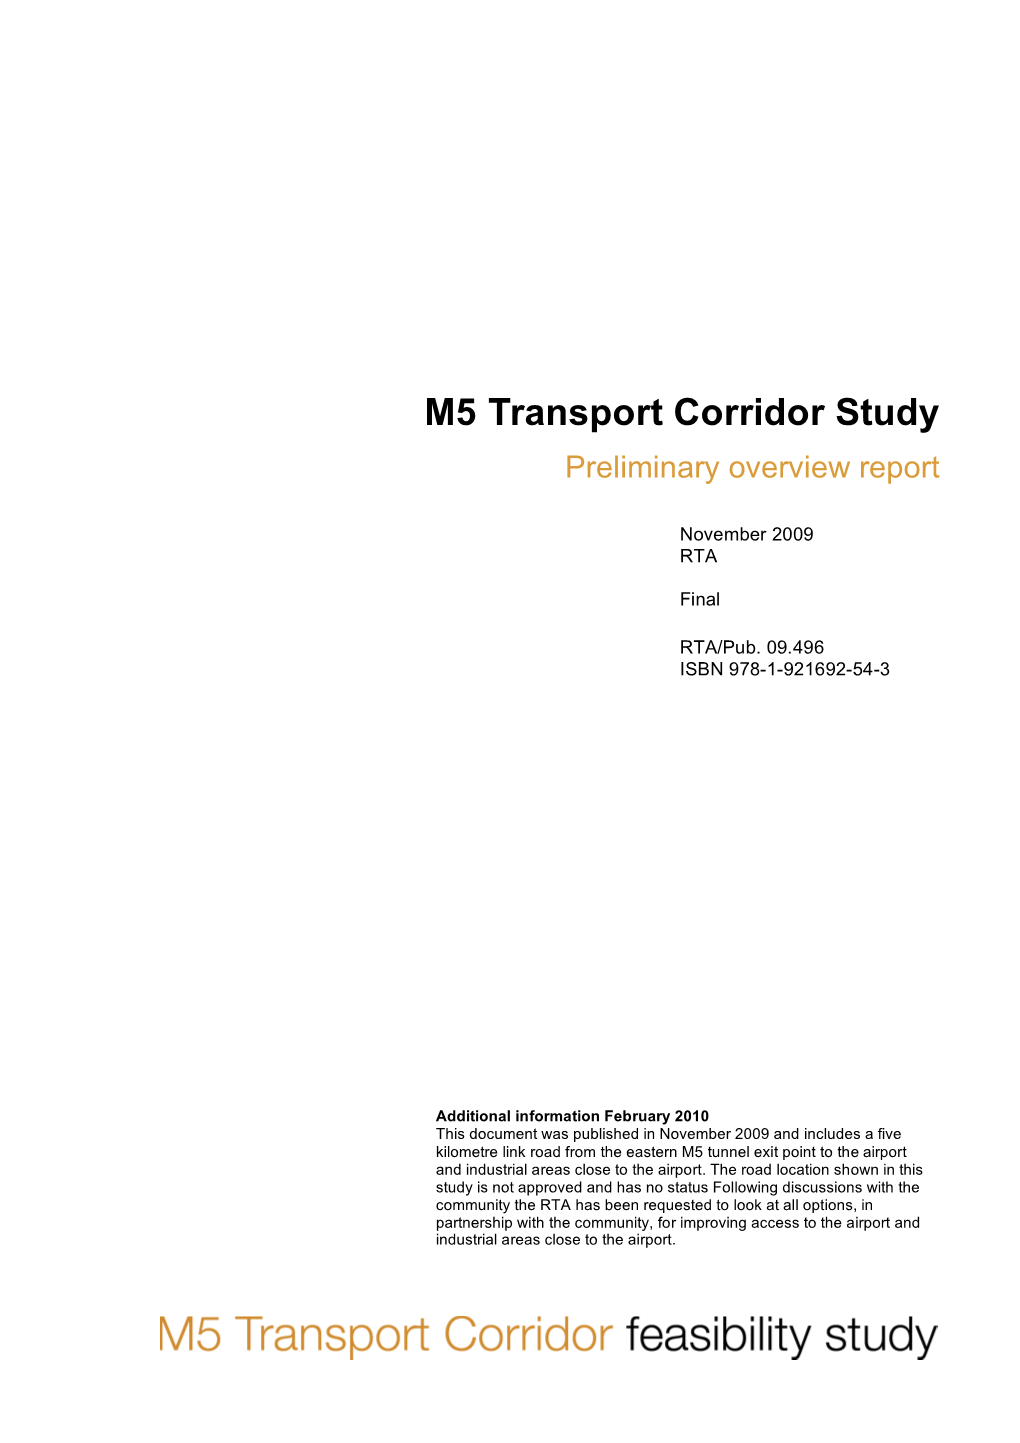 M5 Transport Corridor Study Preliminary Overview Report